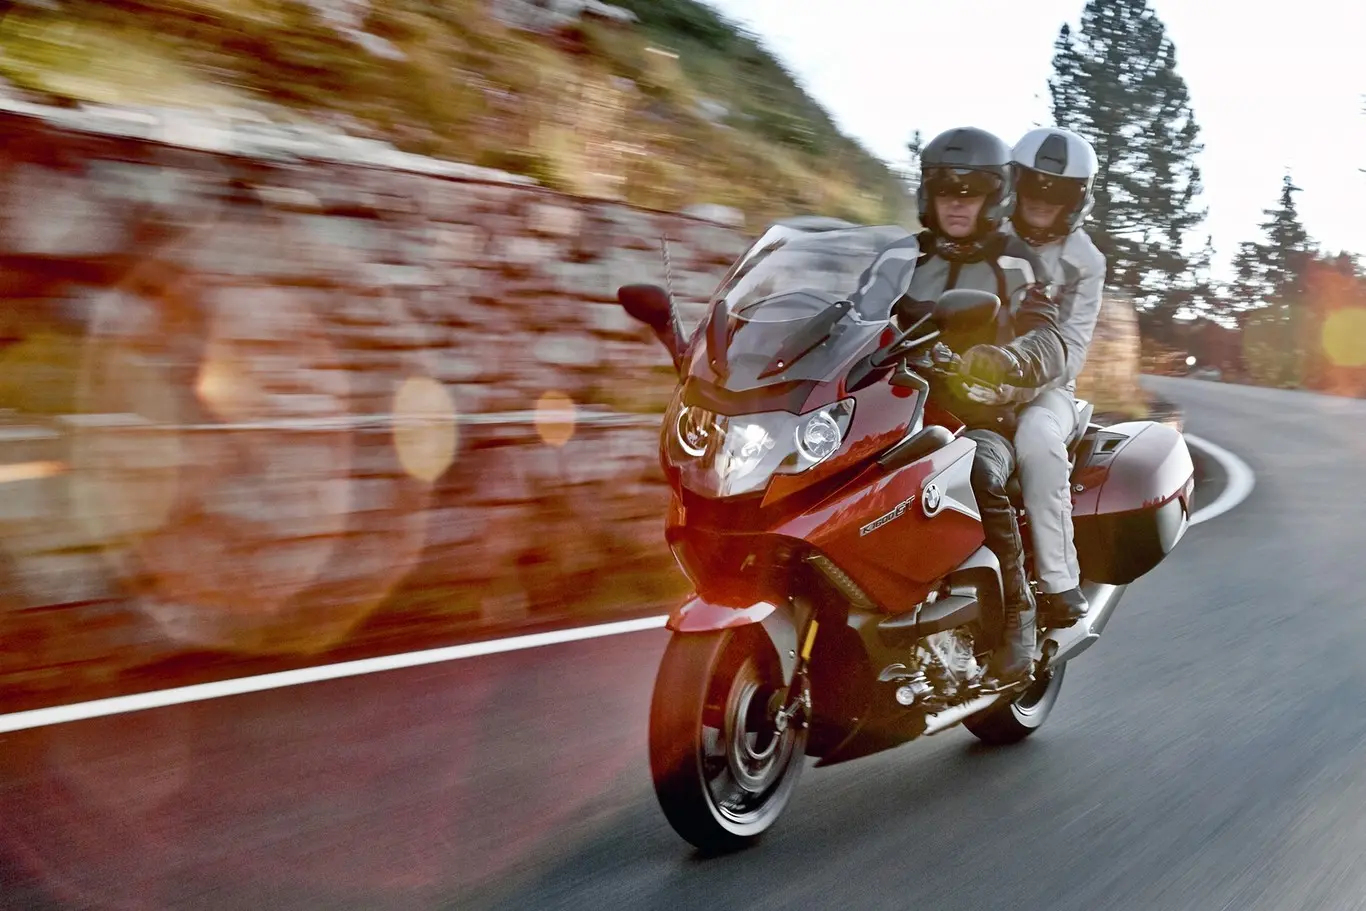 si lleva un pasajero en la motocicleta al frenar - Cuándo llevamos un pasajero en la moto la distancia de frenado